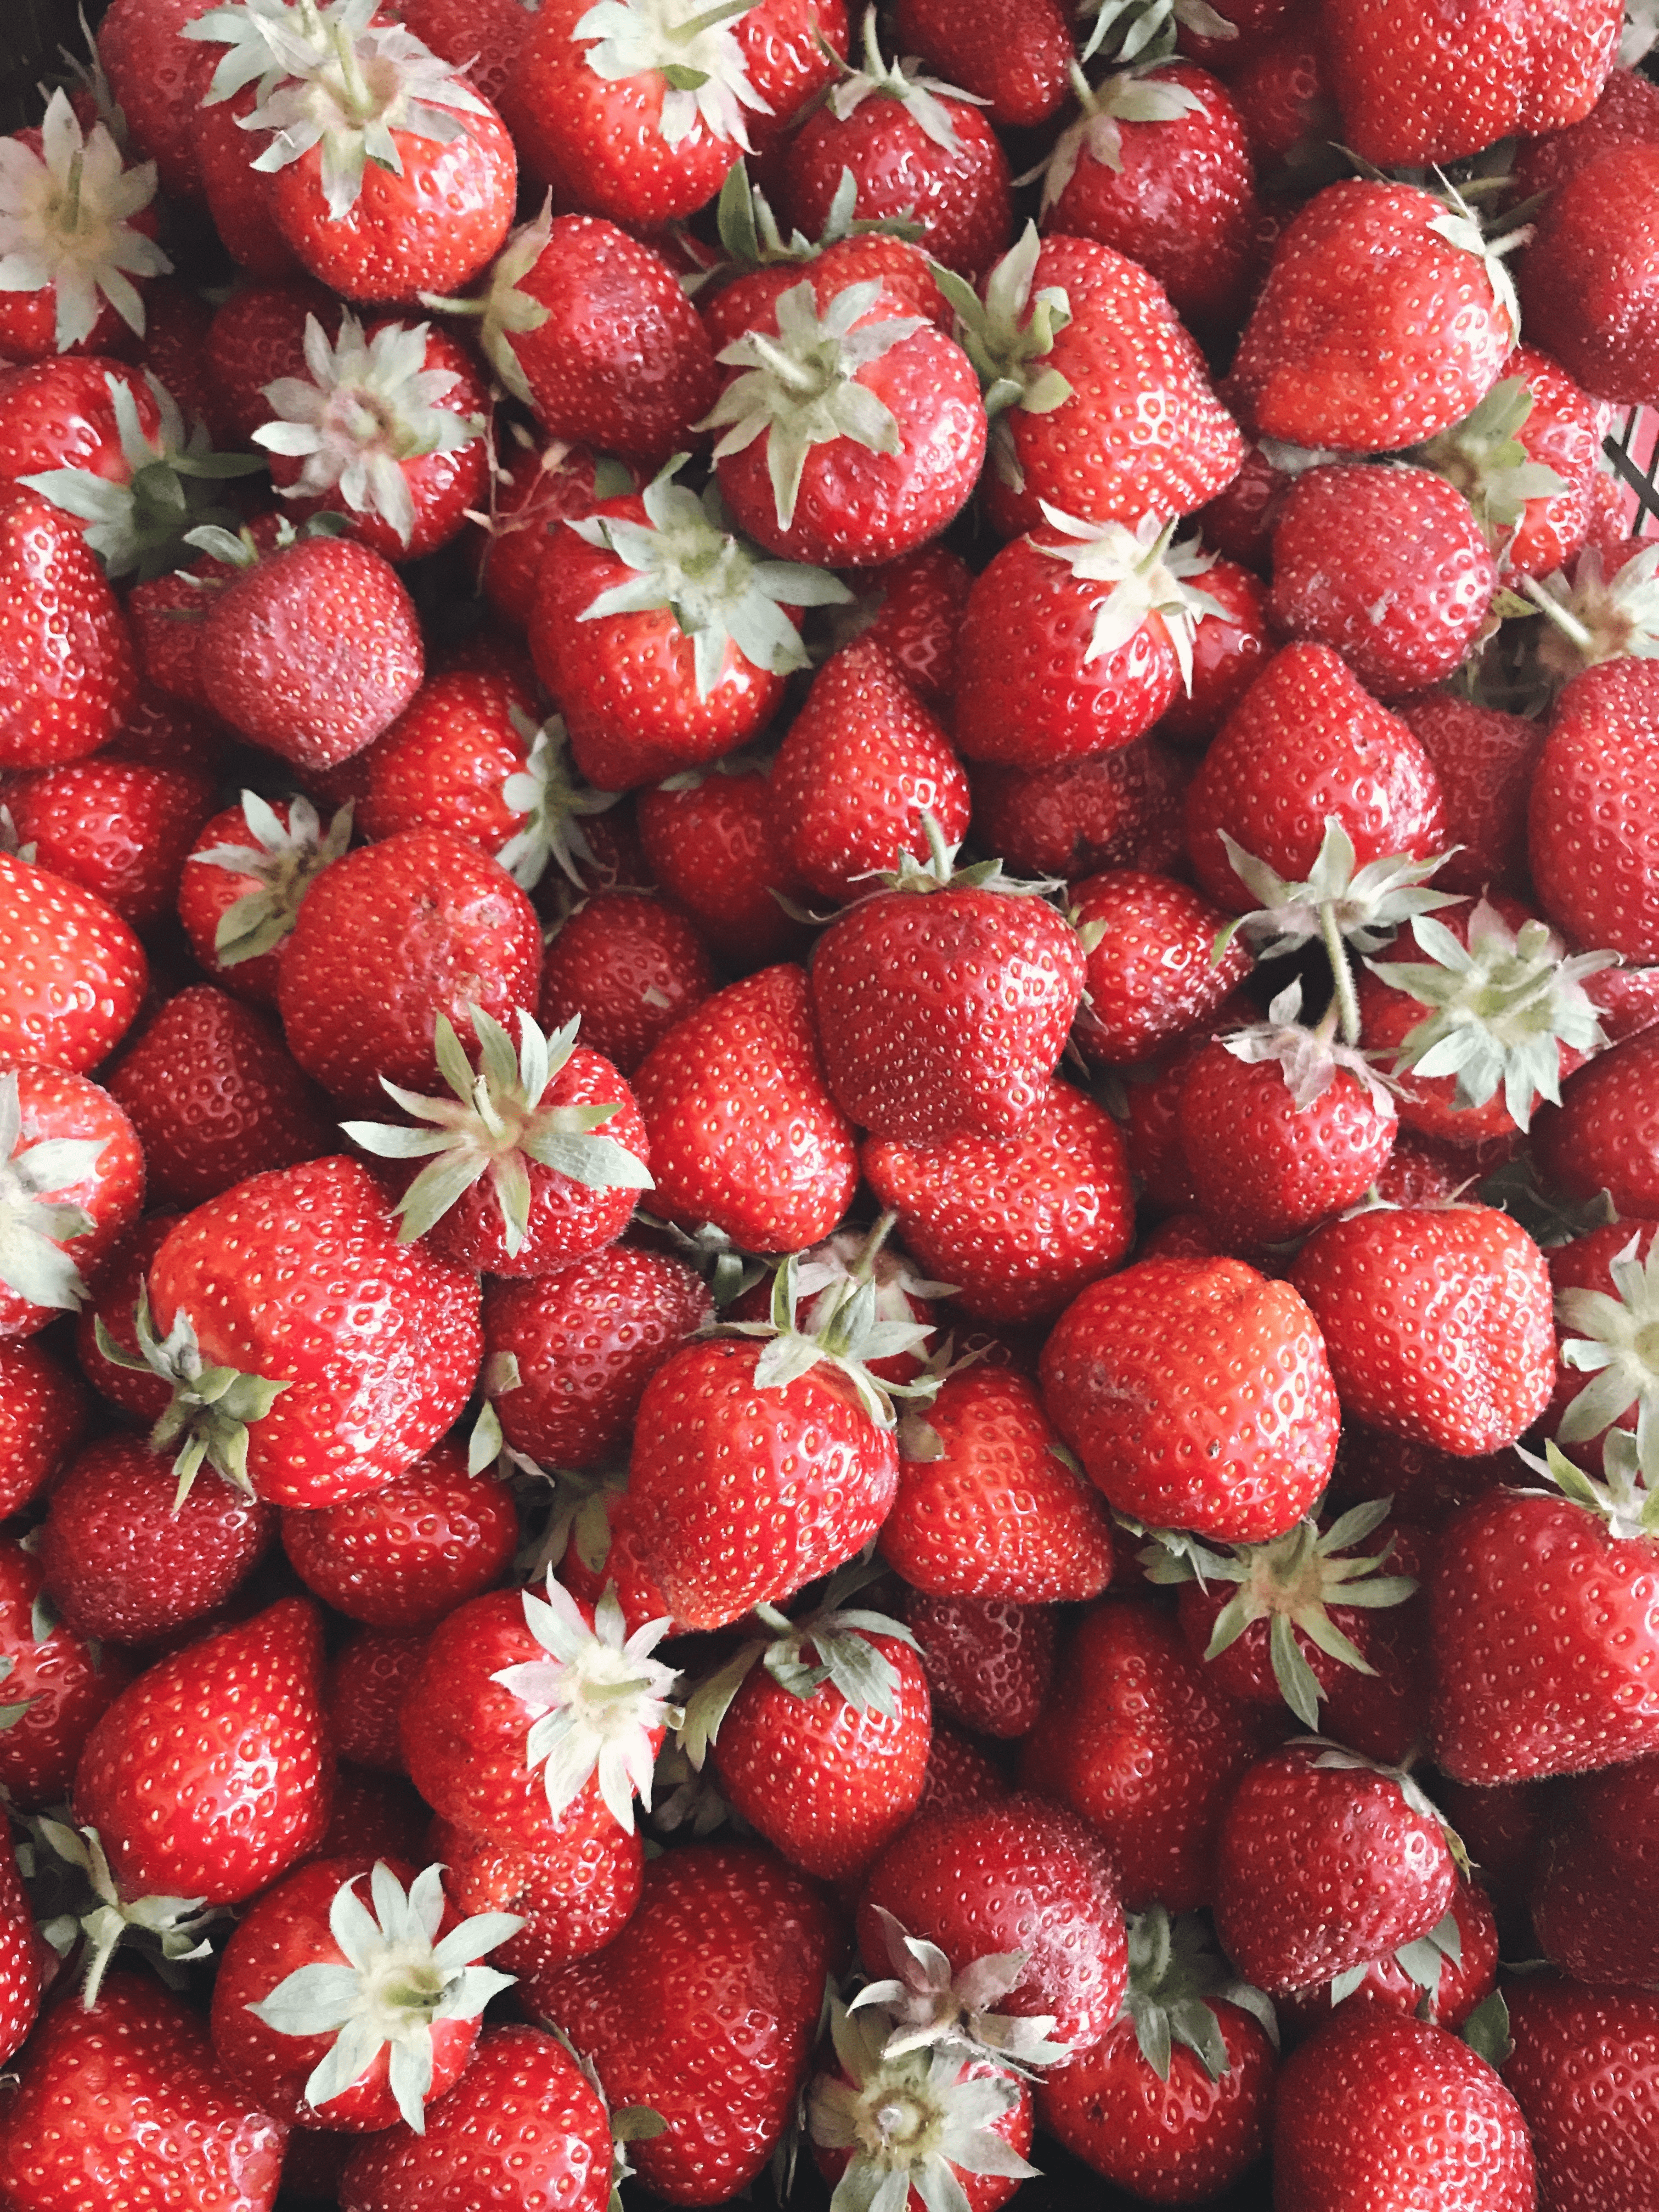 weekend getaways - strawberries plucked from the farm